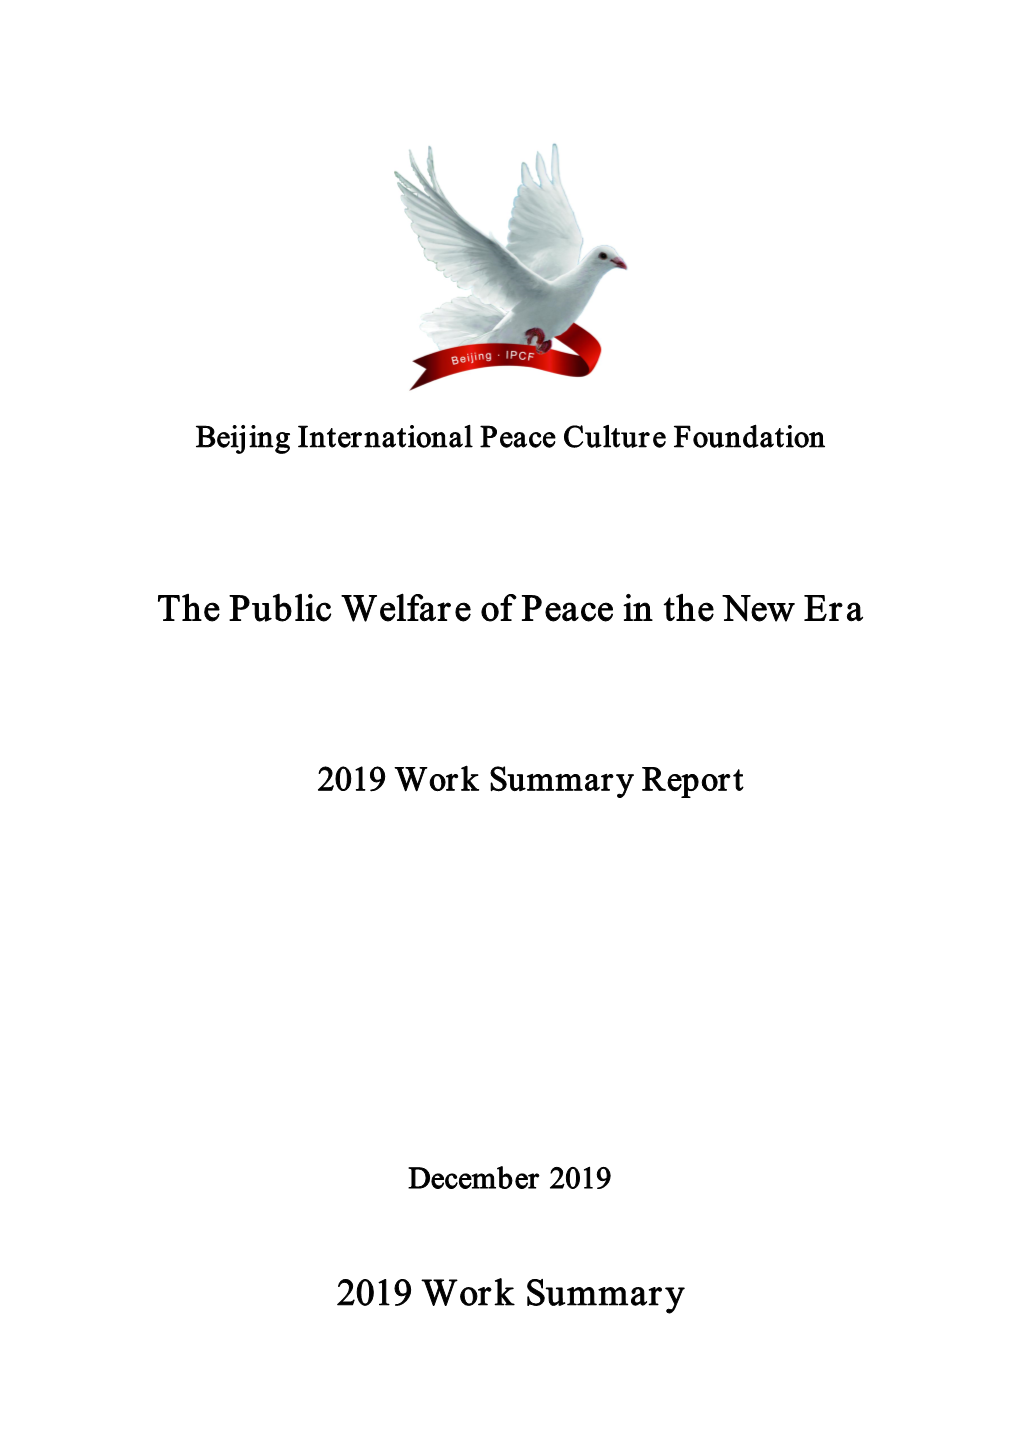 The Public Welfare of Peace in the New Era 2019 Work Summary